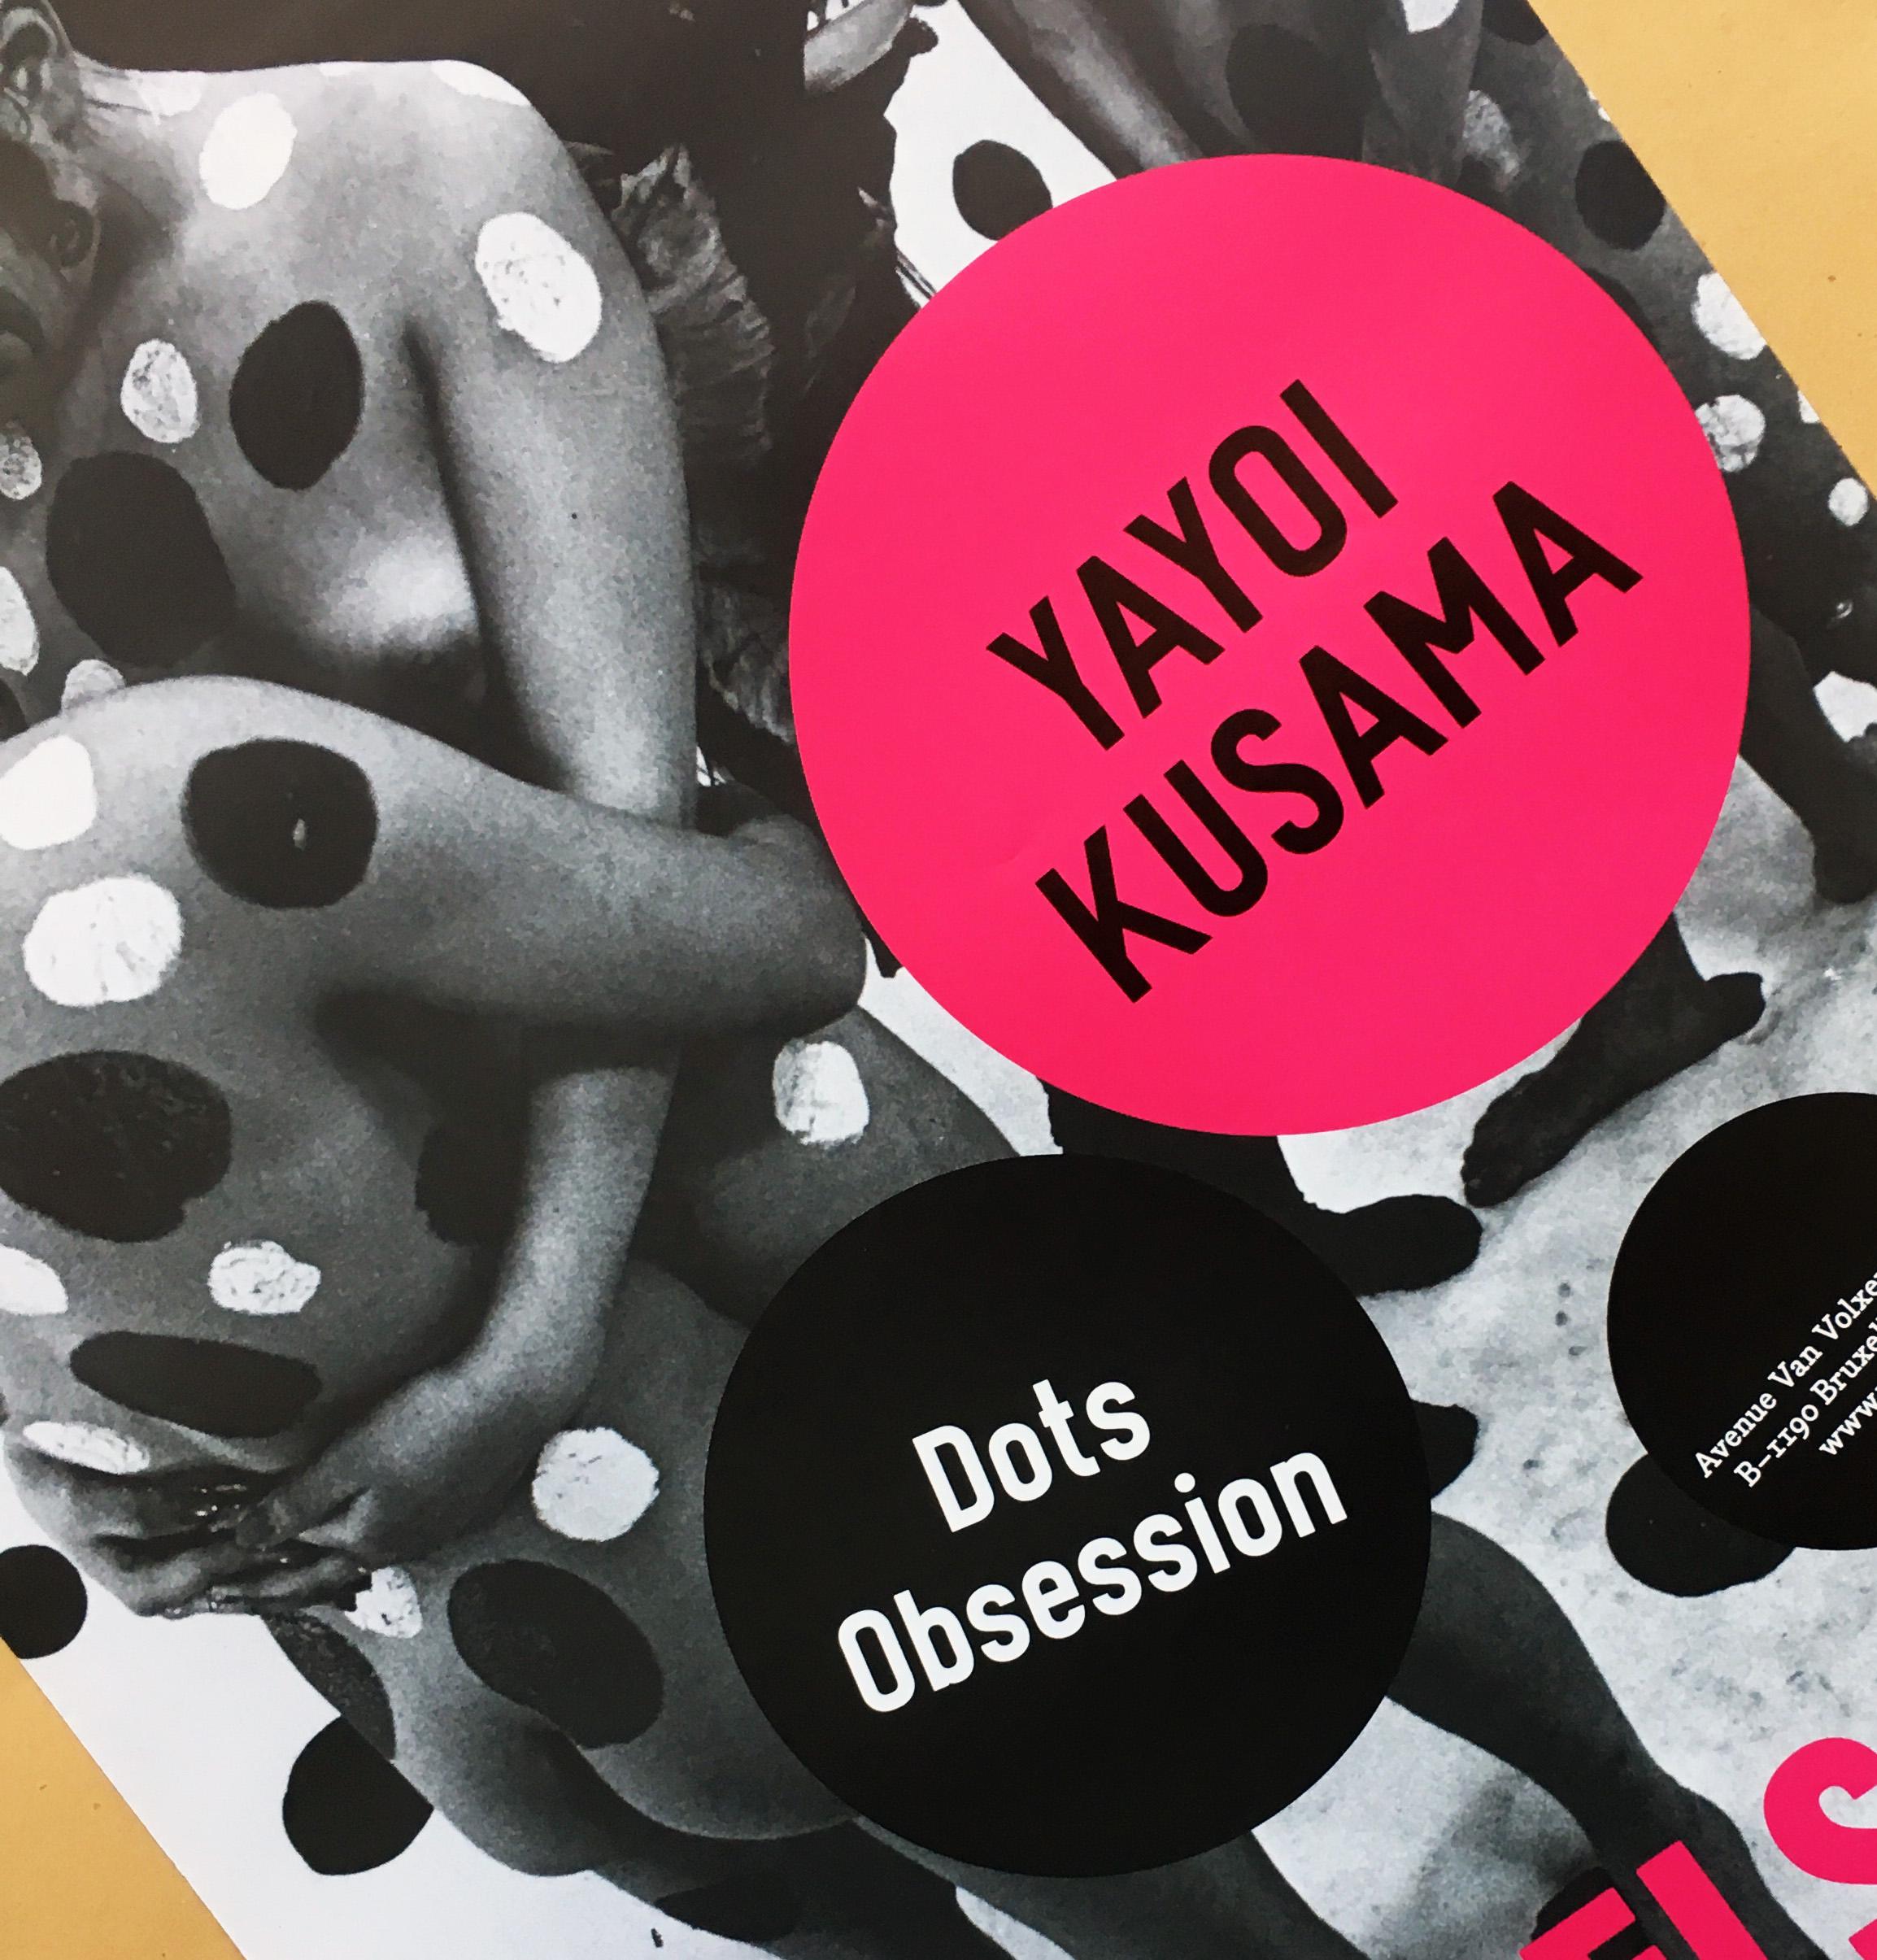 kusama exhibition poster